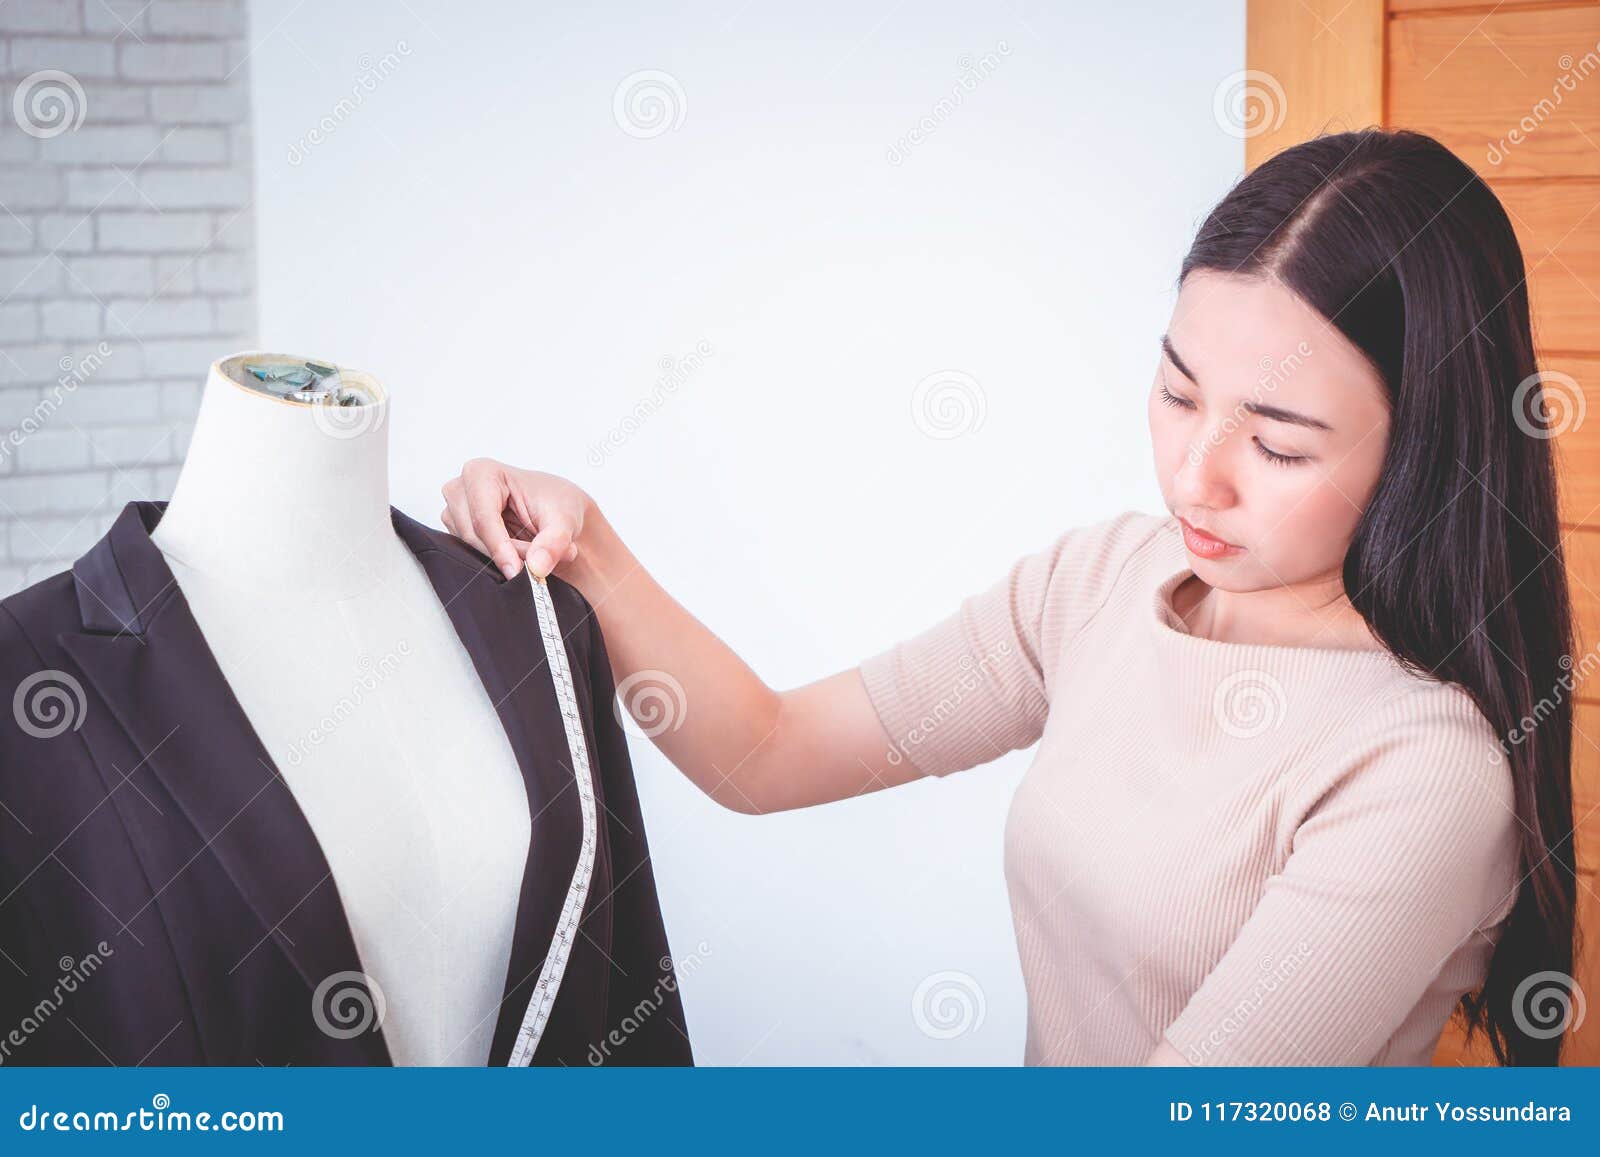 Fashion Designer Measuring Shoulder with Measuring Tape Stock Photo ...